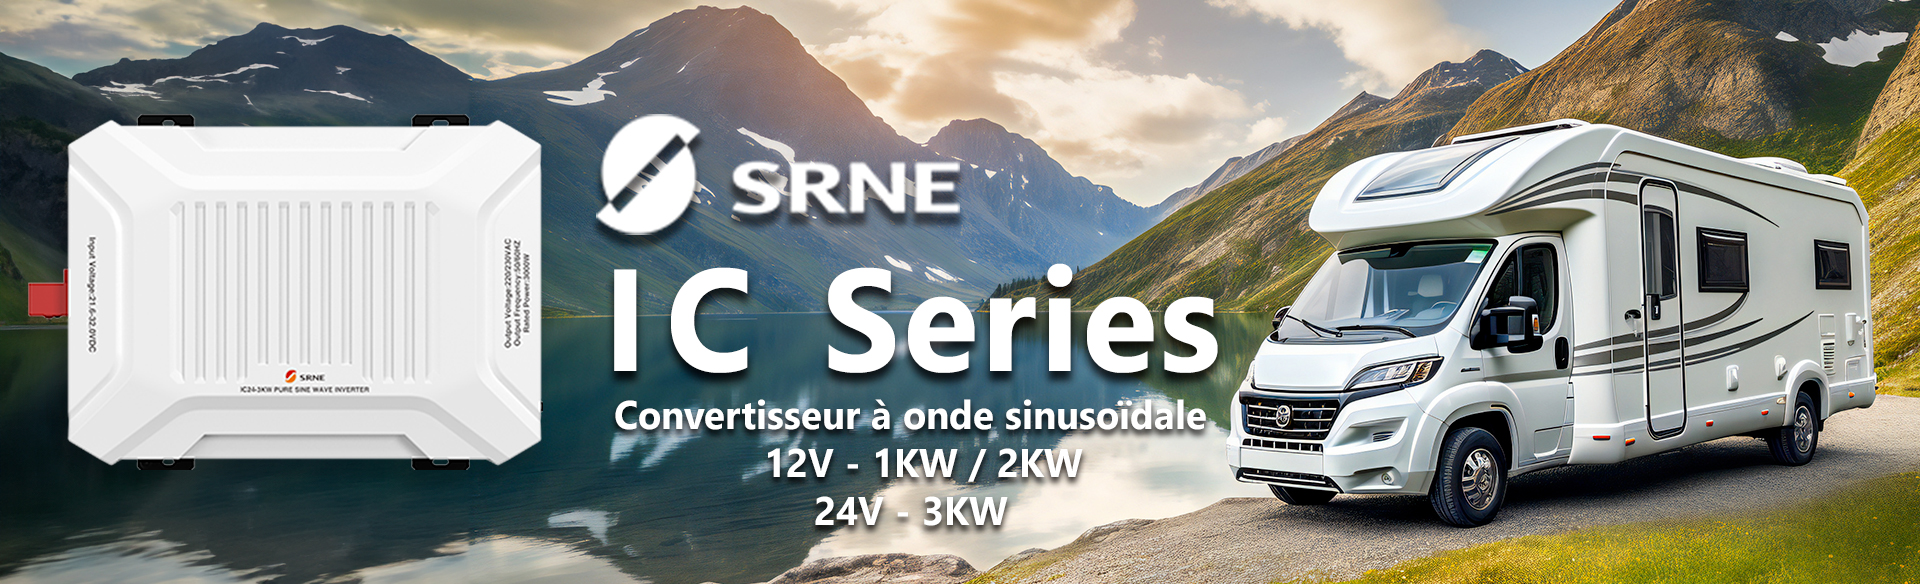 SRNE IC Series